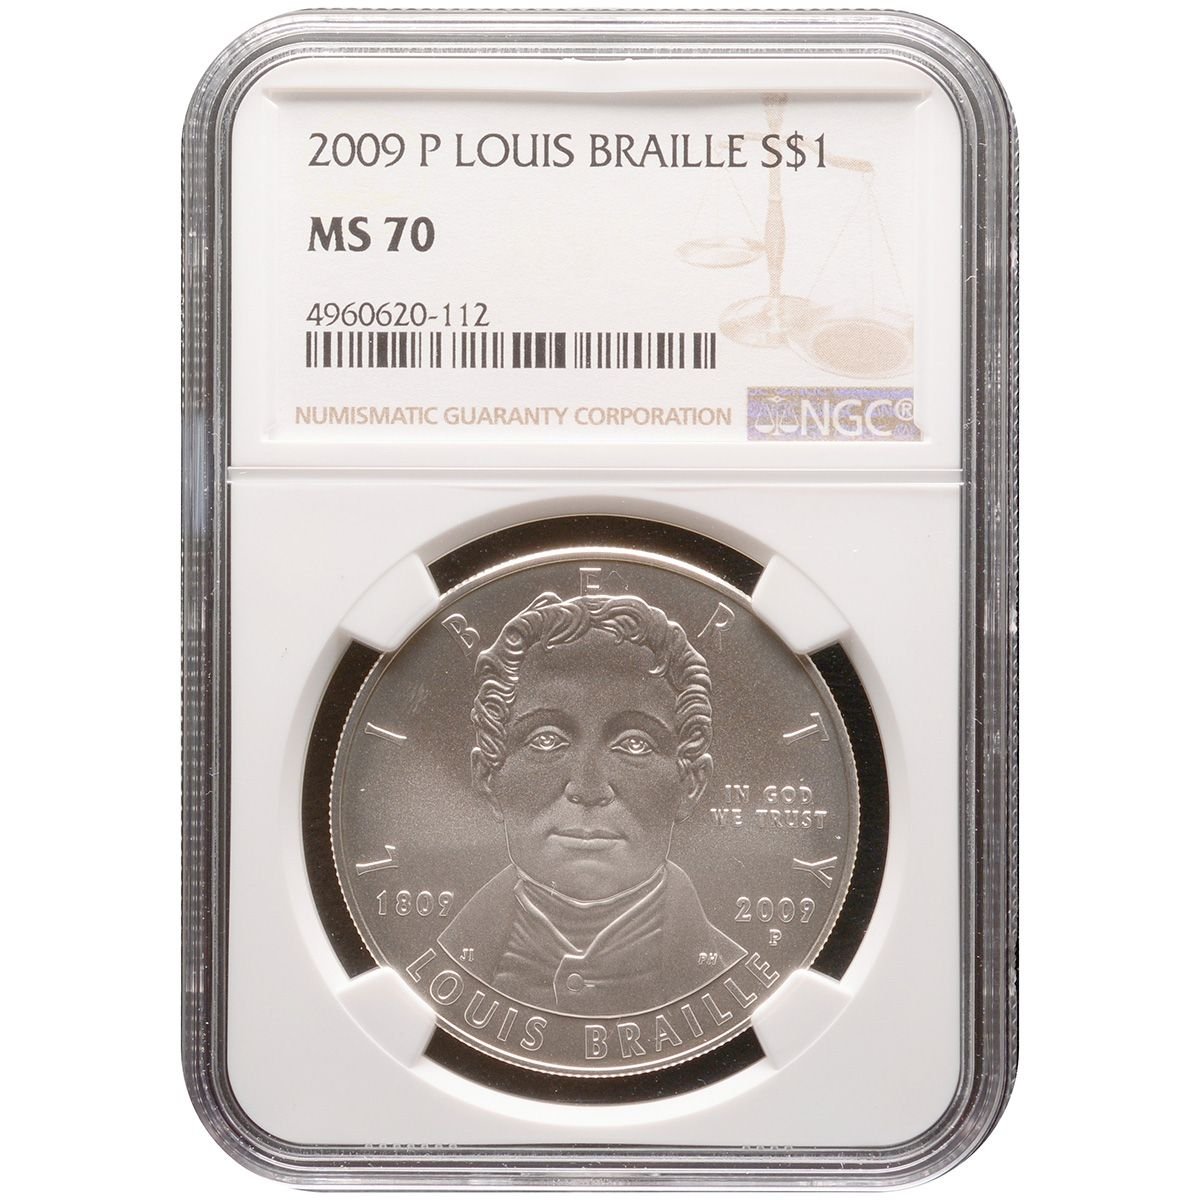 2009 1 oz LOUIS BRAILLE Silver Coin MS 70 - Oz Bullion